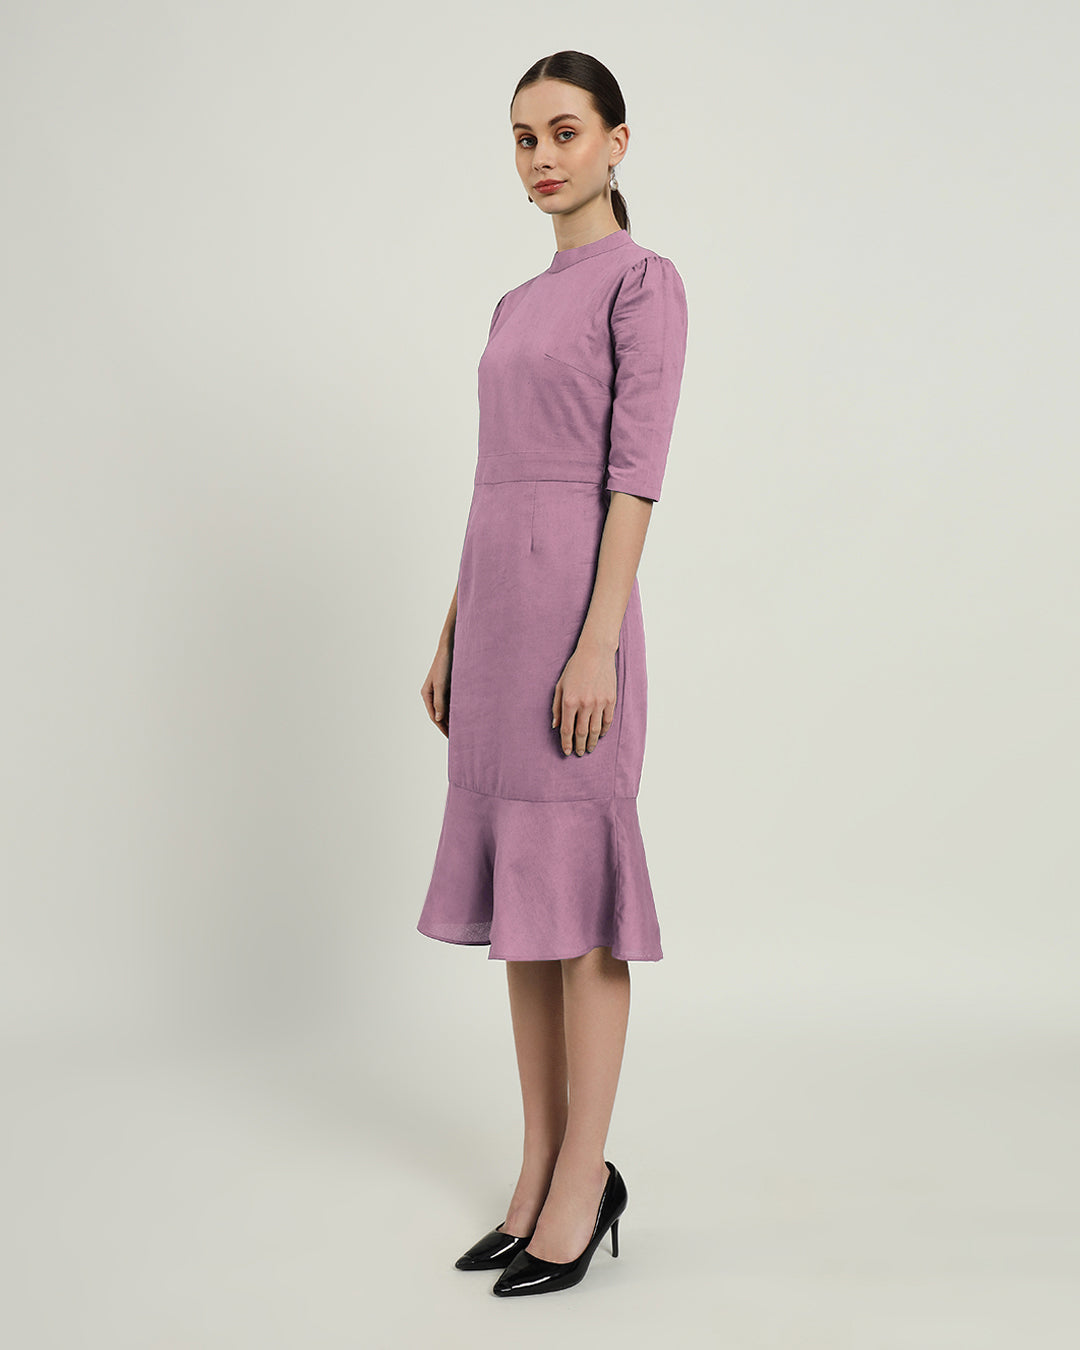 The Charlotte Purple Swirl Dress